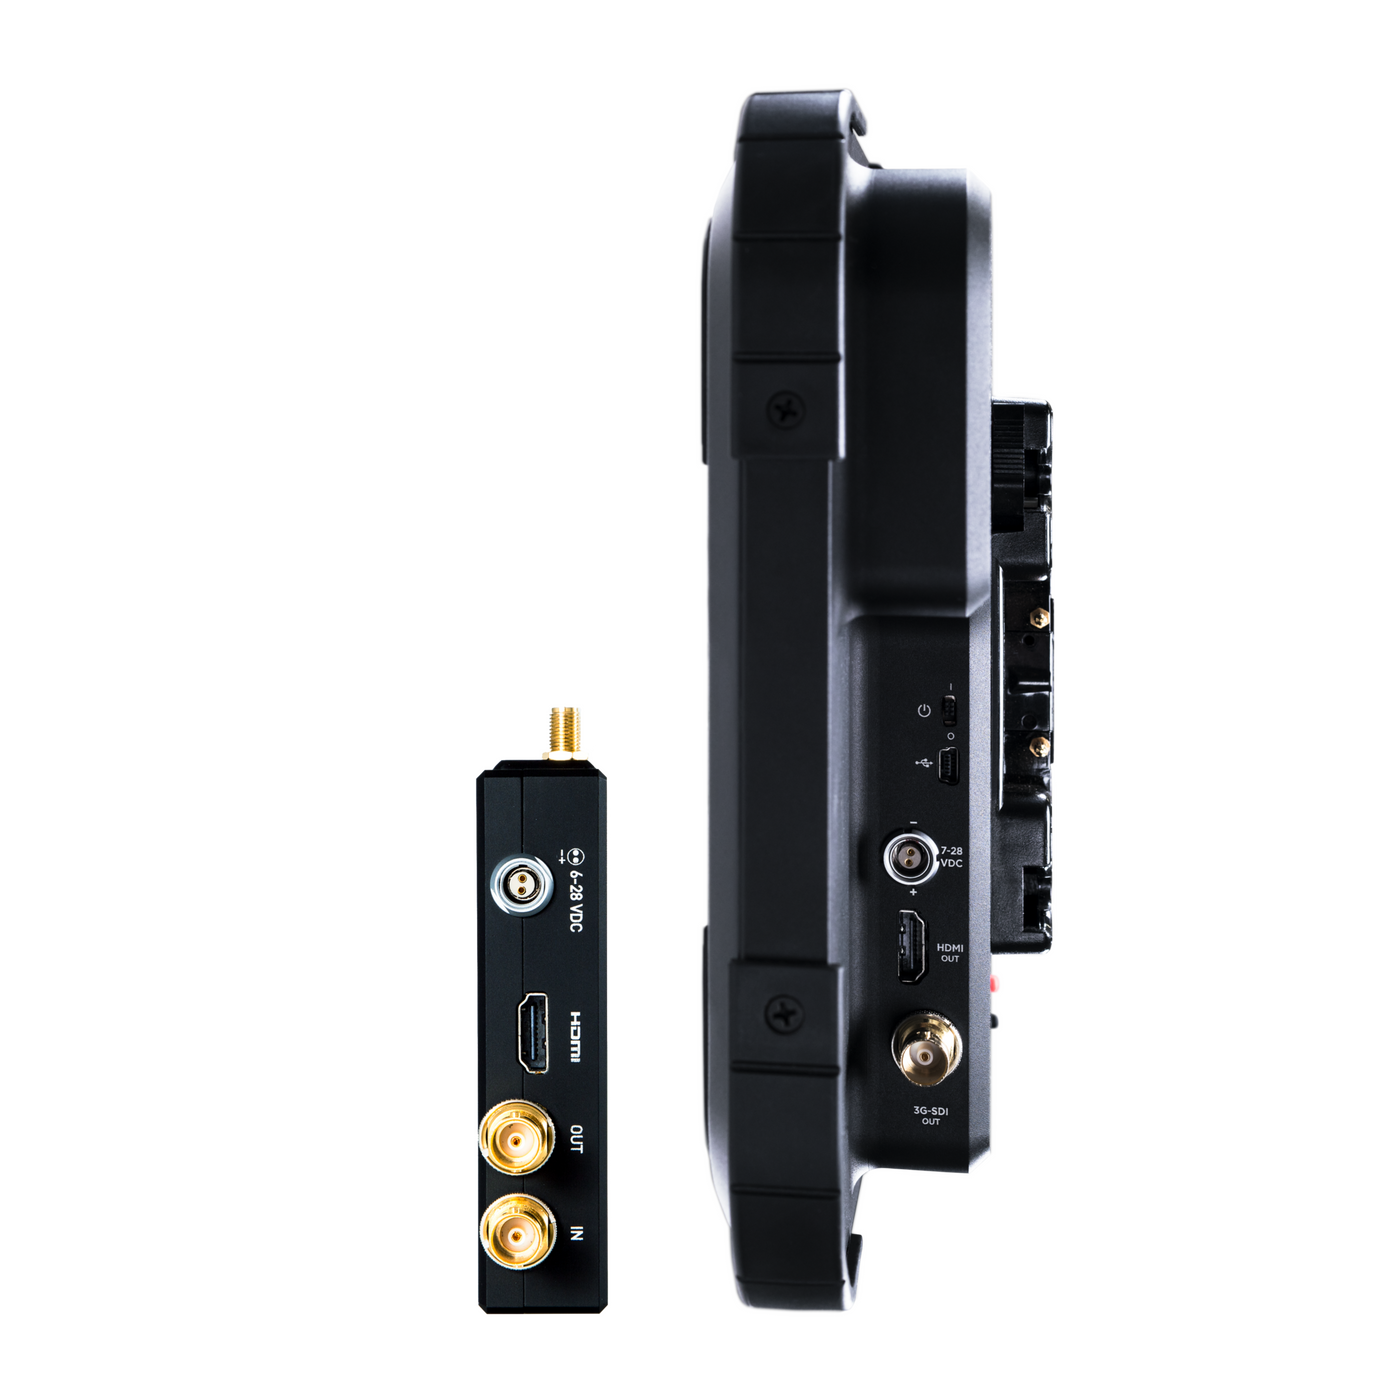 Teradek Bolt 10K 3G-SDI/HDMI Video Transceiver Receiver Deluxe Set (with original Bolt 3000 TX/RX) Gold-Mount